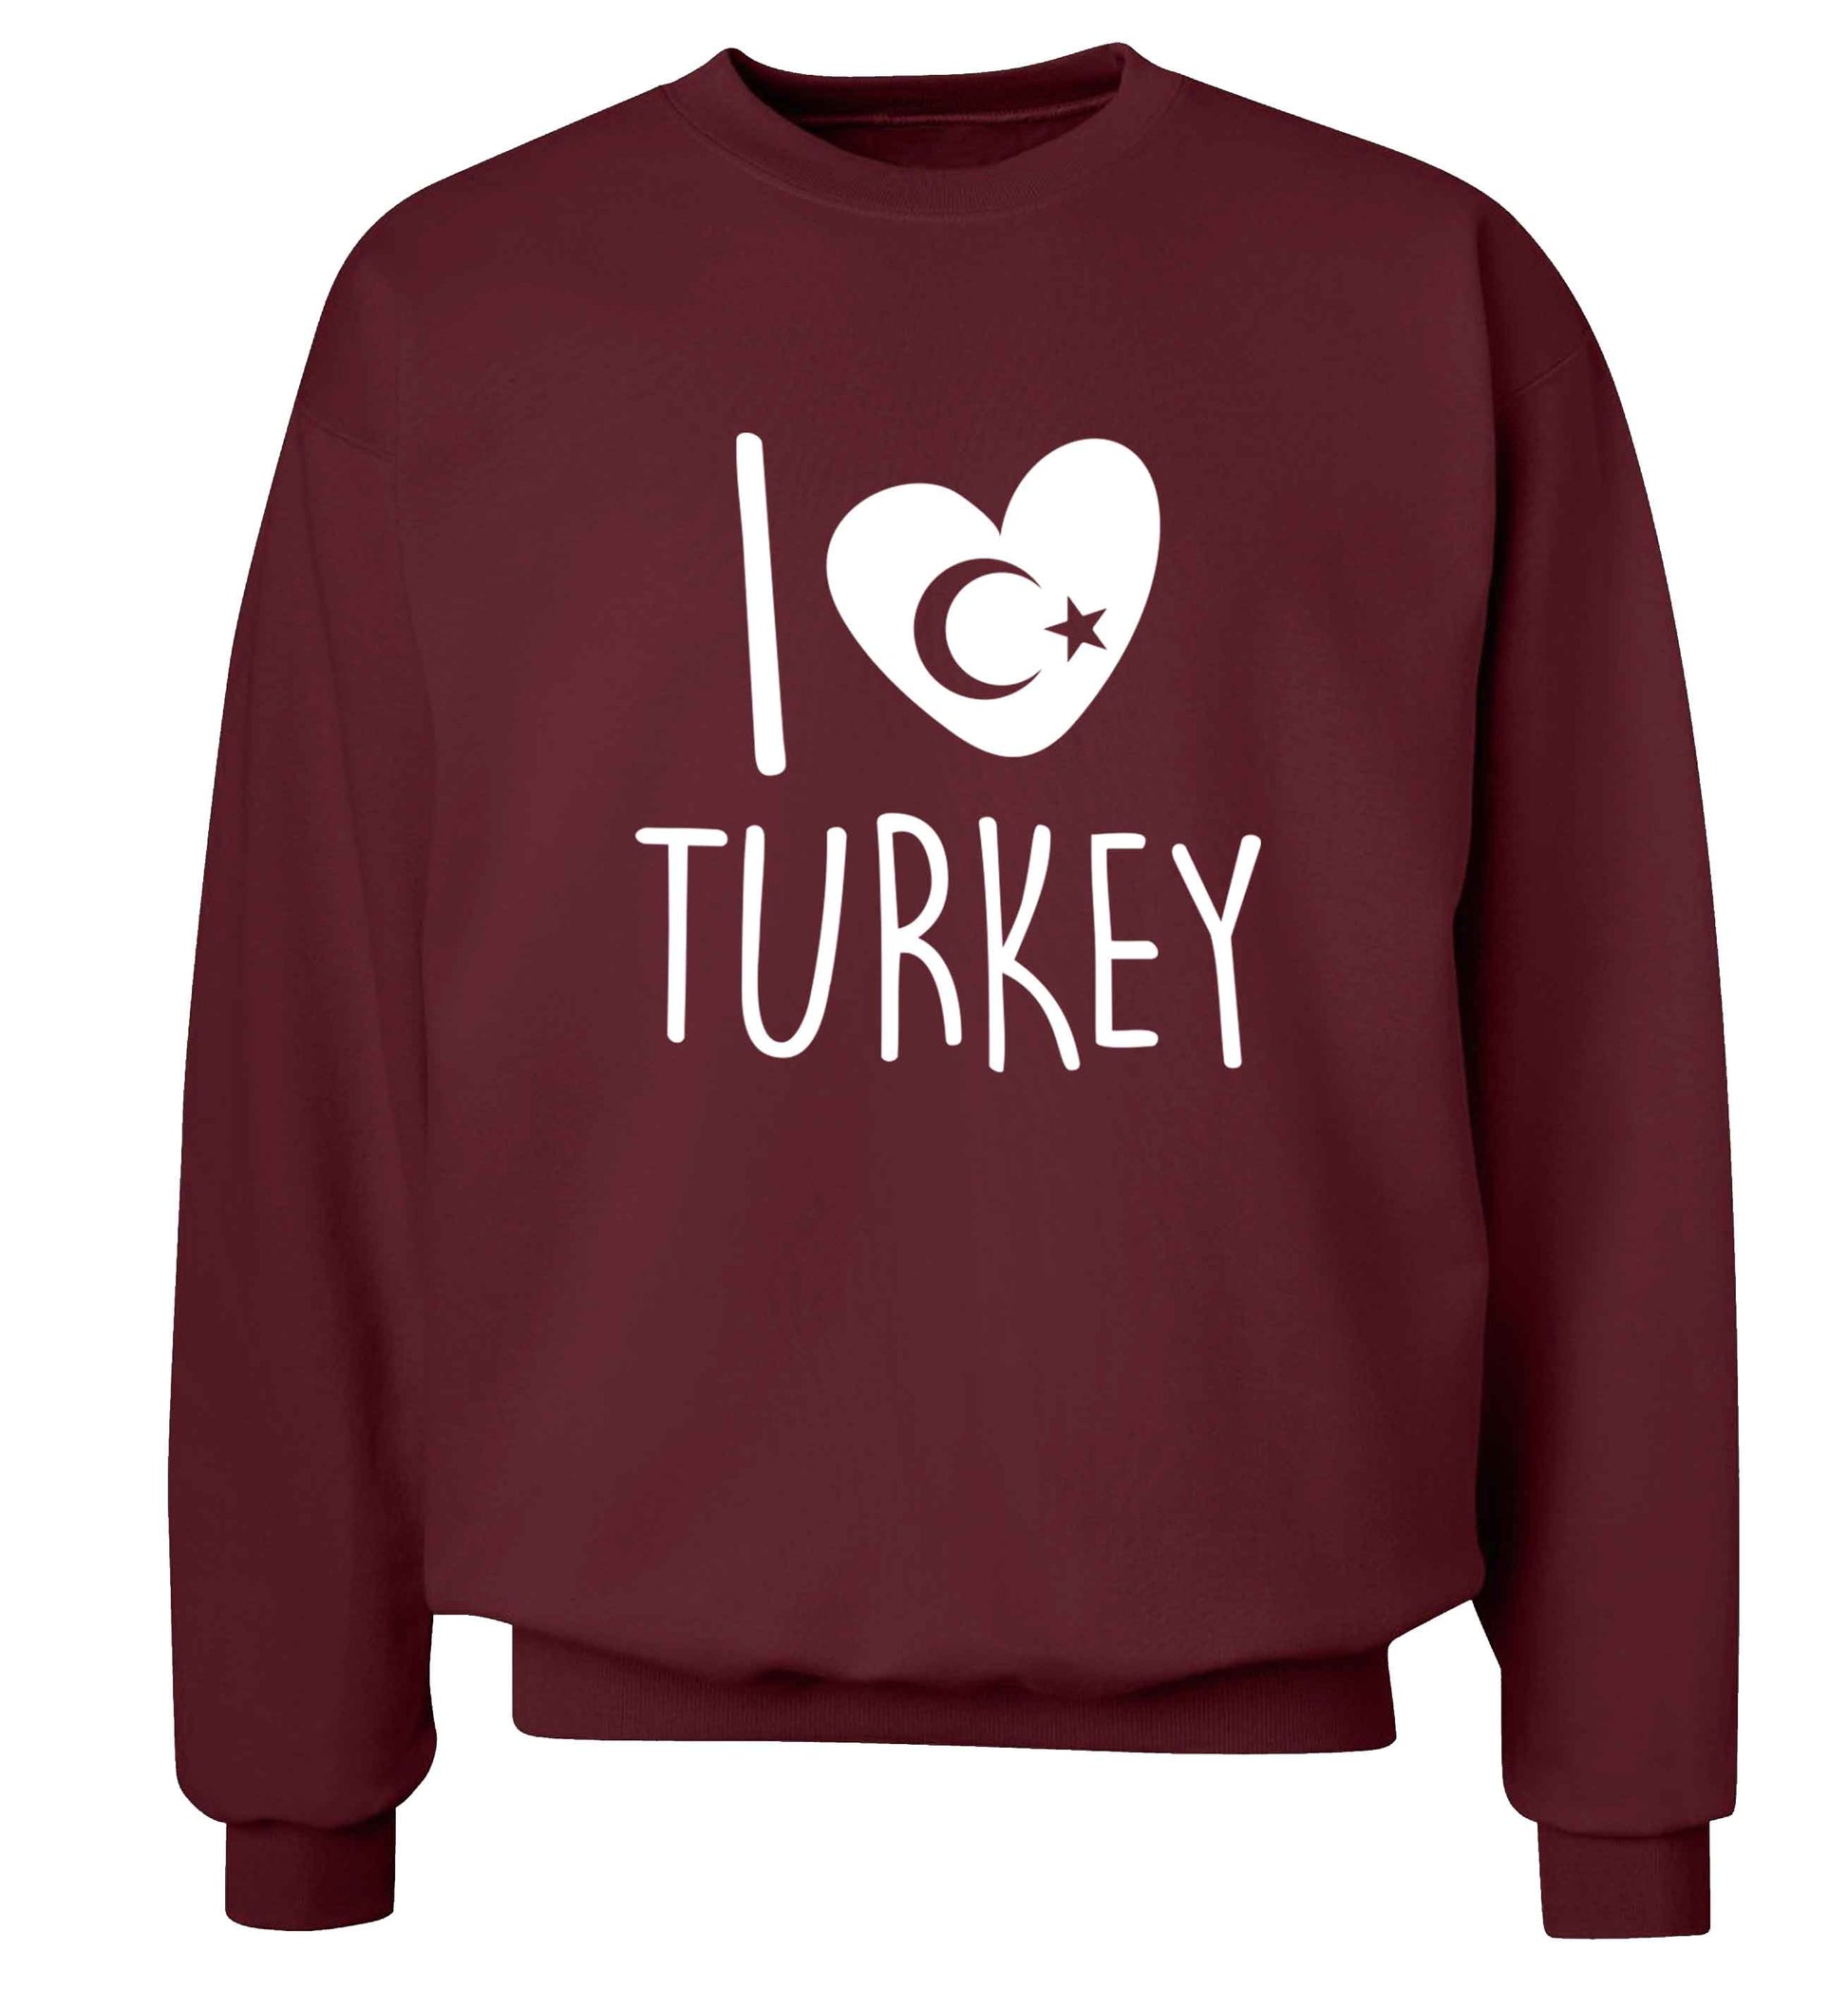 I love Turkey Adult's unisex maroon Sweater 2XL